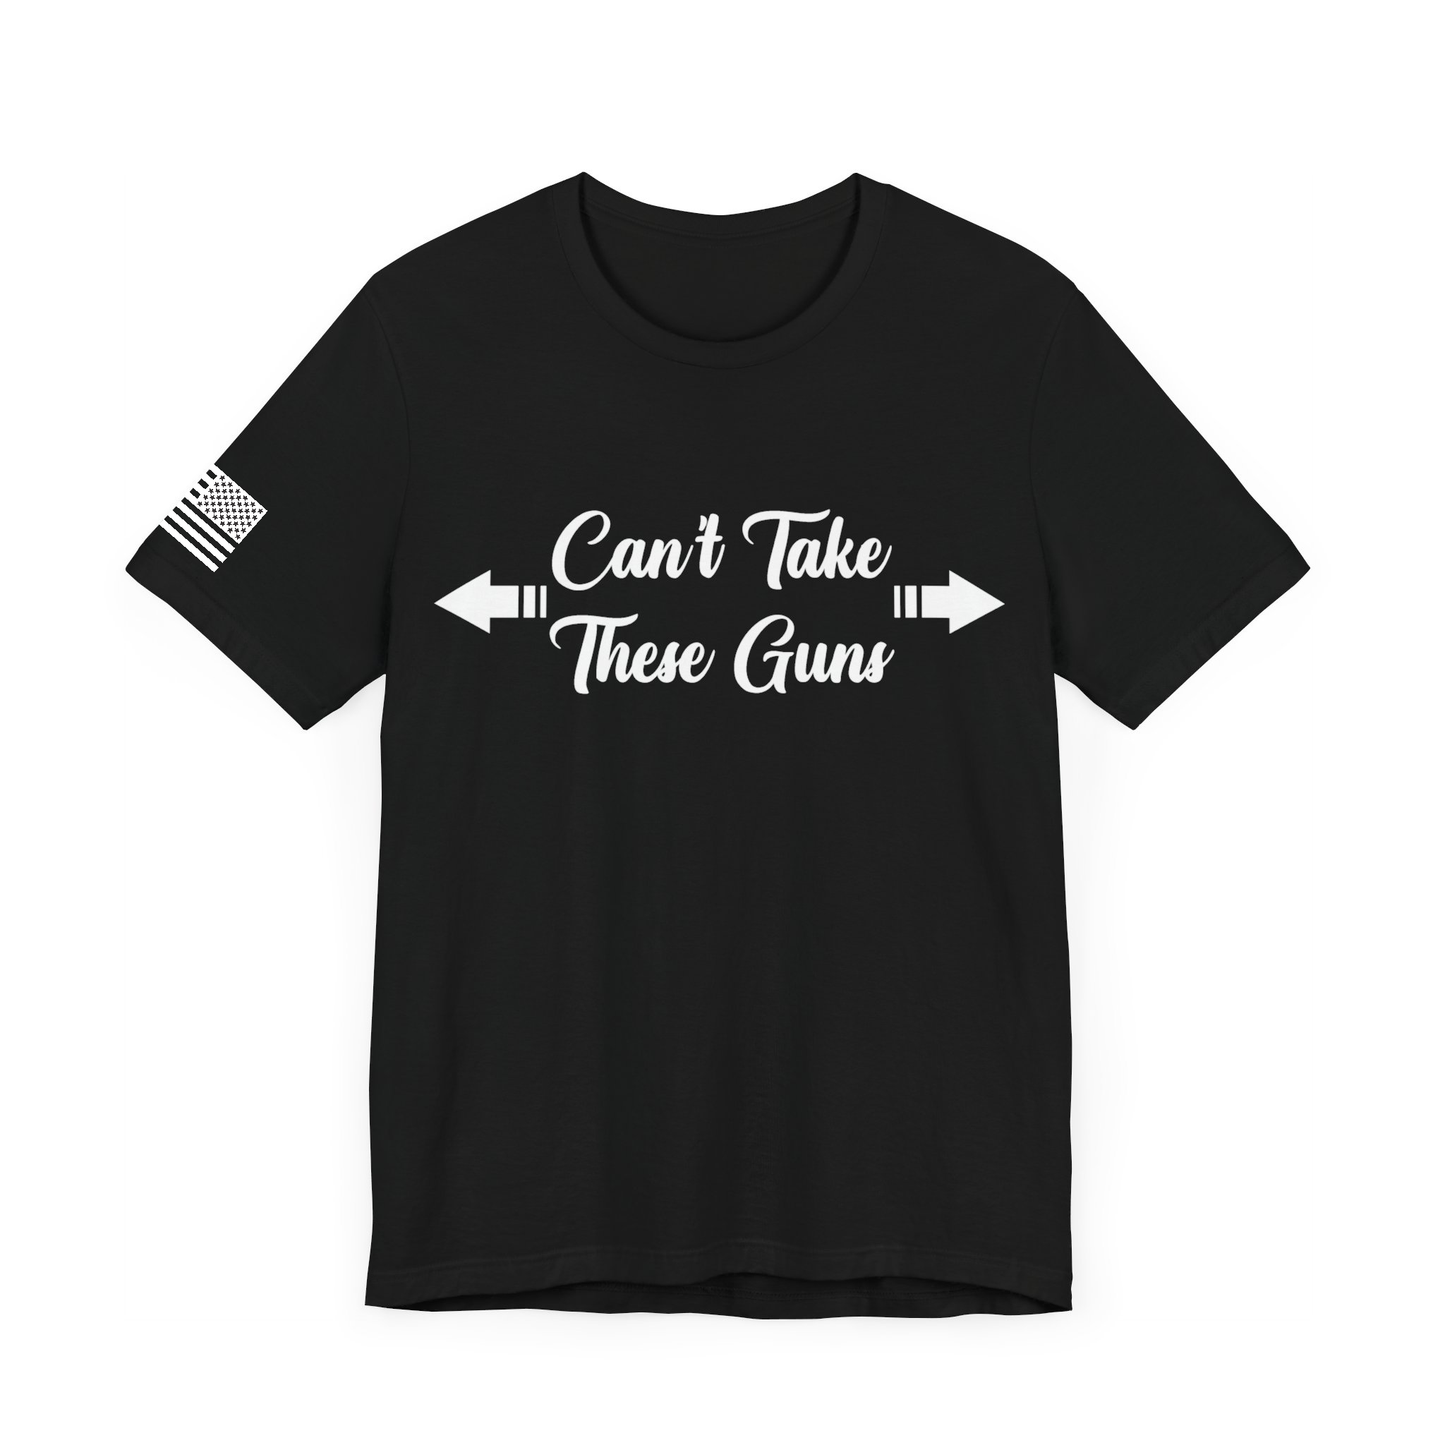 Can't Take These Guns - Black/White T-shirt